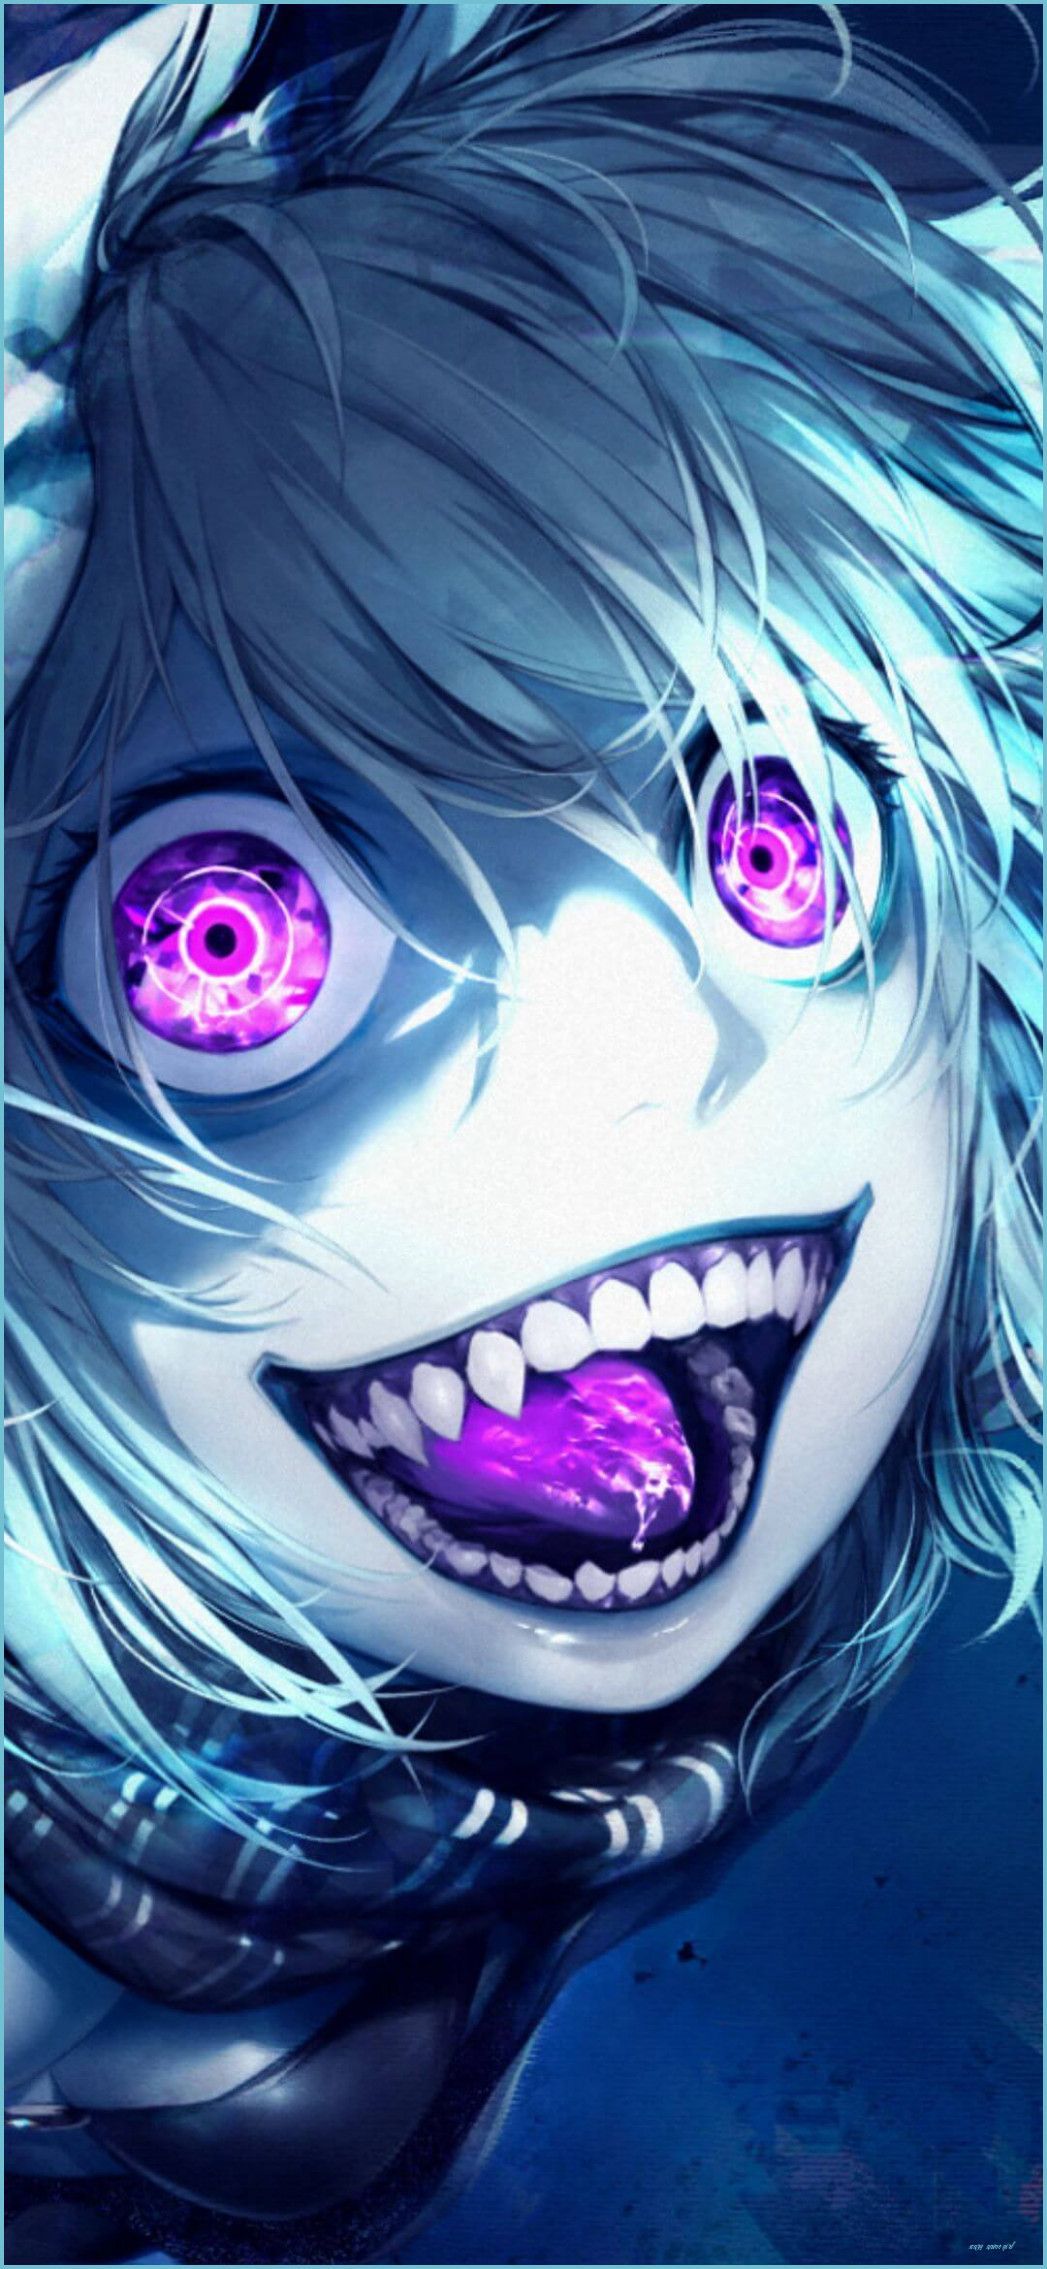 Premium AI Image | Anime Girl With Blonde Hair and Light Blue Eyes Clara